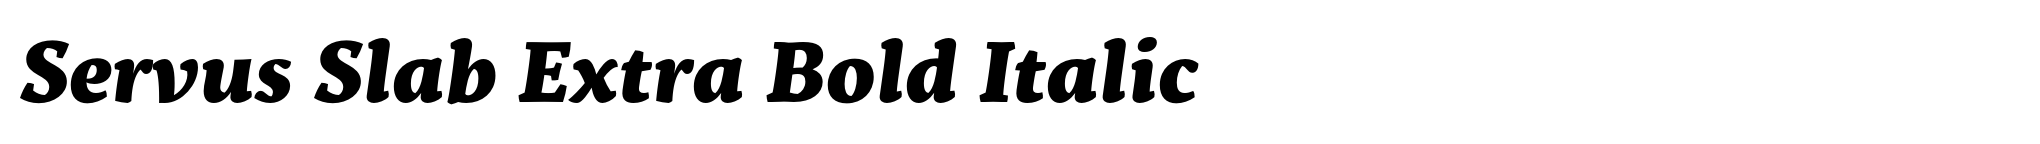 Servus Slab Extra Bold Italic image